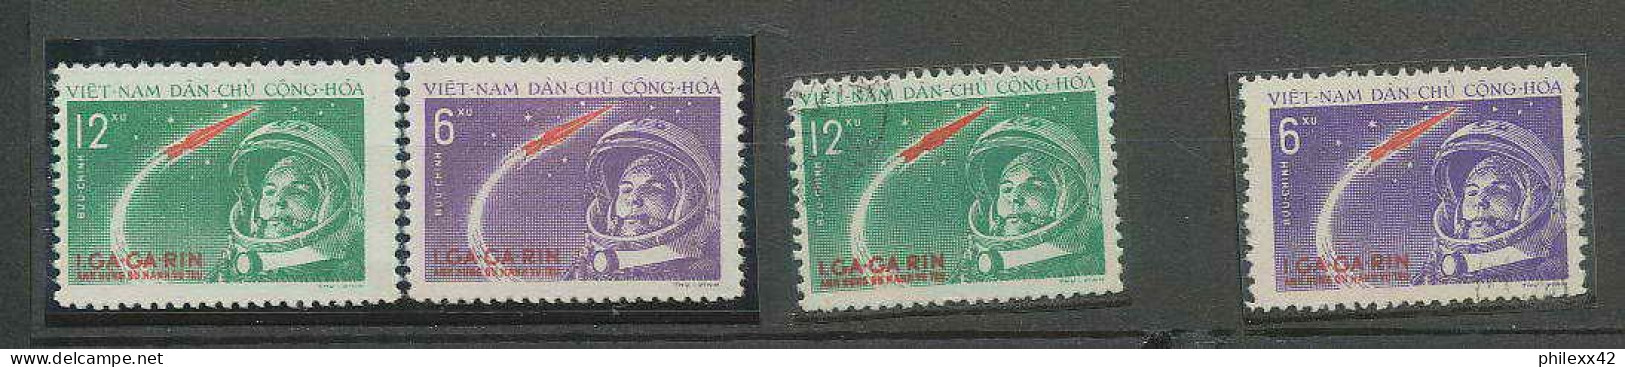 2118/ Espace (space) Neuf ** MNH Viet Nam (Vietnam) - 228/229 Gagarine Gagarin + Used - Asie